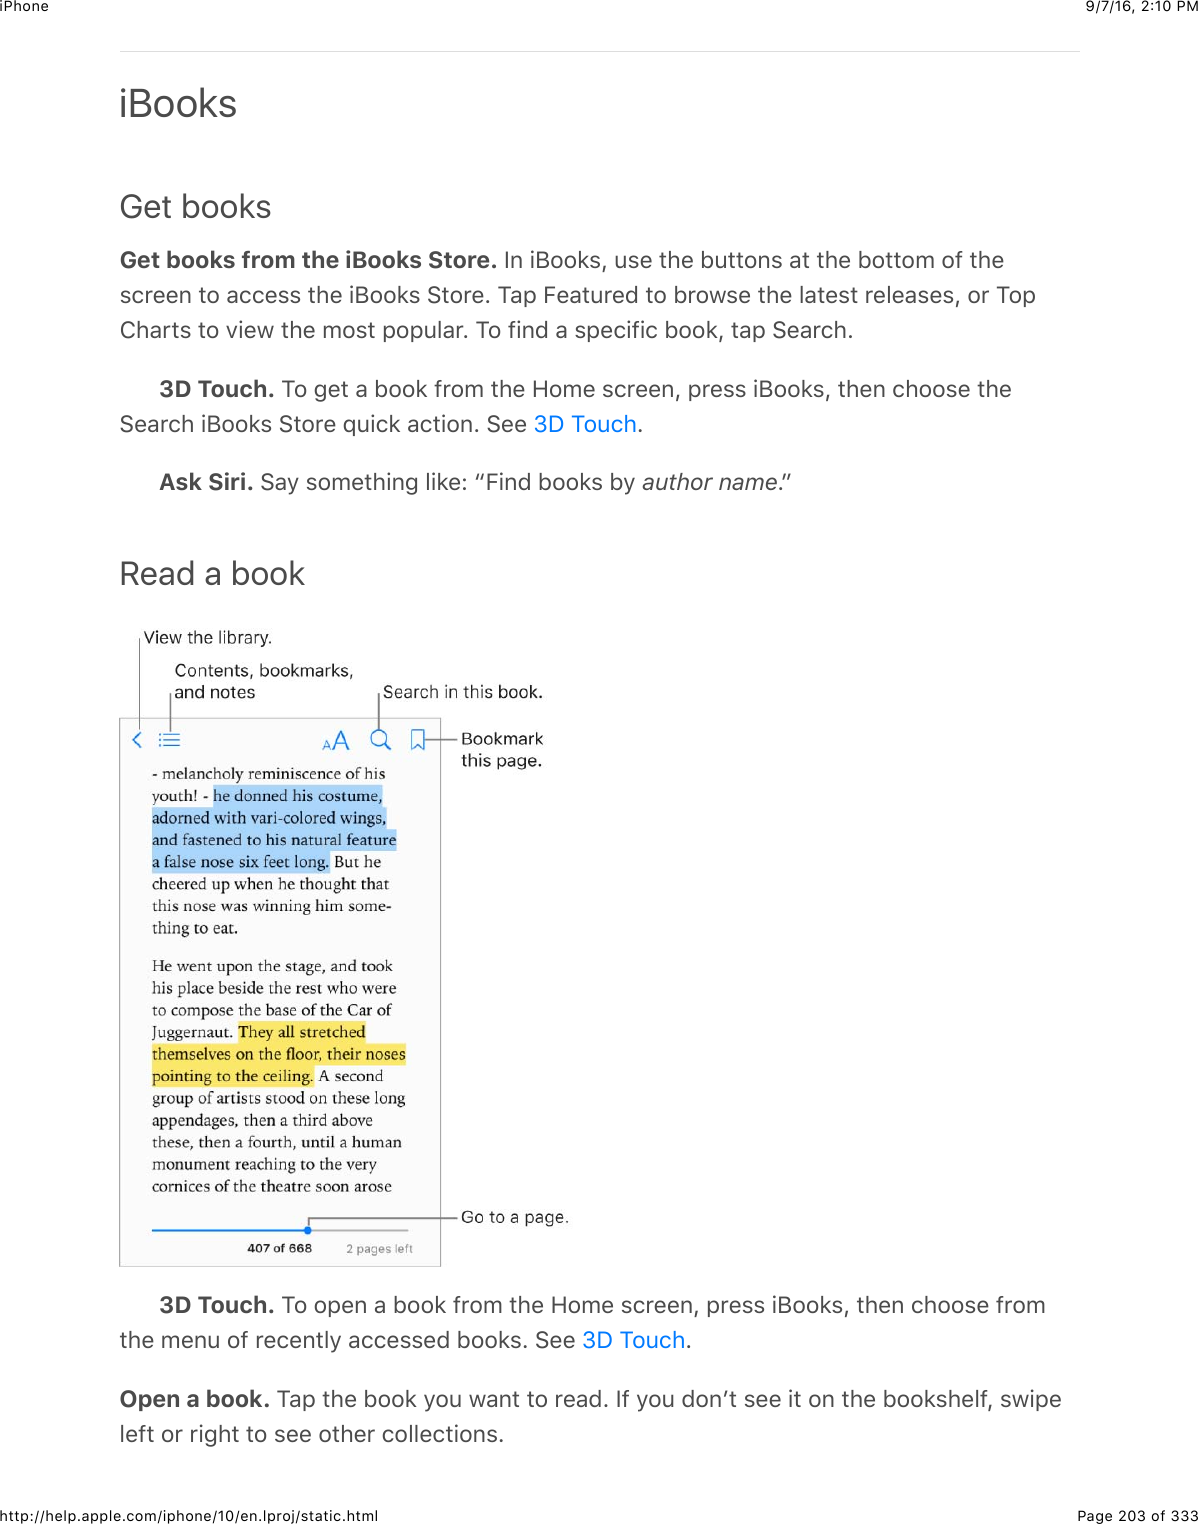 9/7/16, 2)10 PMiPhonePage 203 of 333http://help.apple.com/iphone/10/en.lproj/static.htmliBooksGet booksGet books from the iBooks Store. P6$+F22*%J$:%&quot;$#4&quot;$1:##26%$&amp;#$#4&quot;$12##20$2-$#4&quot;%.&apos;&quot;&quot;6$#2$&amp;..&quot;%%$#4&quot;$+F22*%$&gt;#2&apos;&quot;=$K&amp;,$O&quot;&amp;#:&apos;&quot;($#2$1&apos;2@%&quot;$#4&quot;$5&amp;#&quot;%#$&apos;&quot;5&quot;&amp;%&quot;%J$2&apos;$K2,84&amp;&apos;#%$#2$7+&quot;@$#4&quot;$02%#$,2,:5&amp;&apos;=$K2$-+6($&amp;$%,&quot;.+-+.$122*J$#&amp;,$&gt;&quot;&amp;&apos;.4=3D Touch. K2$3&quot;#$&amp;$122*$-&apos;20$#4&quot;$R20&quot;$%.&apos;&quot;&quot;6J$,&apos;&quot;%%$+F22*%J$#4&quot;6$.422%&quot;$#4&quot;&gt;&quot;&amp;&apos;.4$+F22*%$&gt;#2&apos;&quot;$_:+.*$&amp;.#+26=$&gt;&quot;&quot;$ =Ask Siri. &gt;&amp;9$%20&quot;#4+63$5+*&quot;L$cO+6($122*%$19$author name=dRead a book3D Touch. K2$2,&quot;6$&amp;$122*$-&apos;20$#4&quot;$R20&quot;$%.&apos;&quot;&quot;6J$,&apos;&quot;%%$+F22*%J$#4&quot;6$.422%&quot;$-&apos;20#4&quot;$0&quot;6:$2-$&apos;&quot;.&quot;6#59$&amp;..&quot;%%&quot;($122*%=$&gt;&quot;&quot;$ =Open a book. K&amp;,$#4&quot;$122*$92:$@&amp;6#$#2$&apos;&quot;&amp;(=$P-$92:$(26B#$%&quot;&quot;$+#$26$#4&quot;$122*%4&quot;5-J$%@+,&quot;5&quot;-#$2&apos;$&apos;+34#$#2$%&quot;&quot;$2#4&quot;&apos;$.255&quot;.#+26%=eS$K2:.4eS$K2:.4